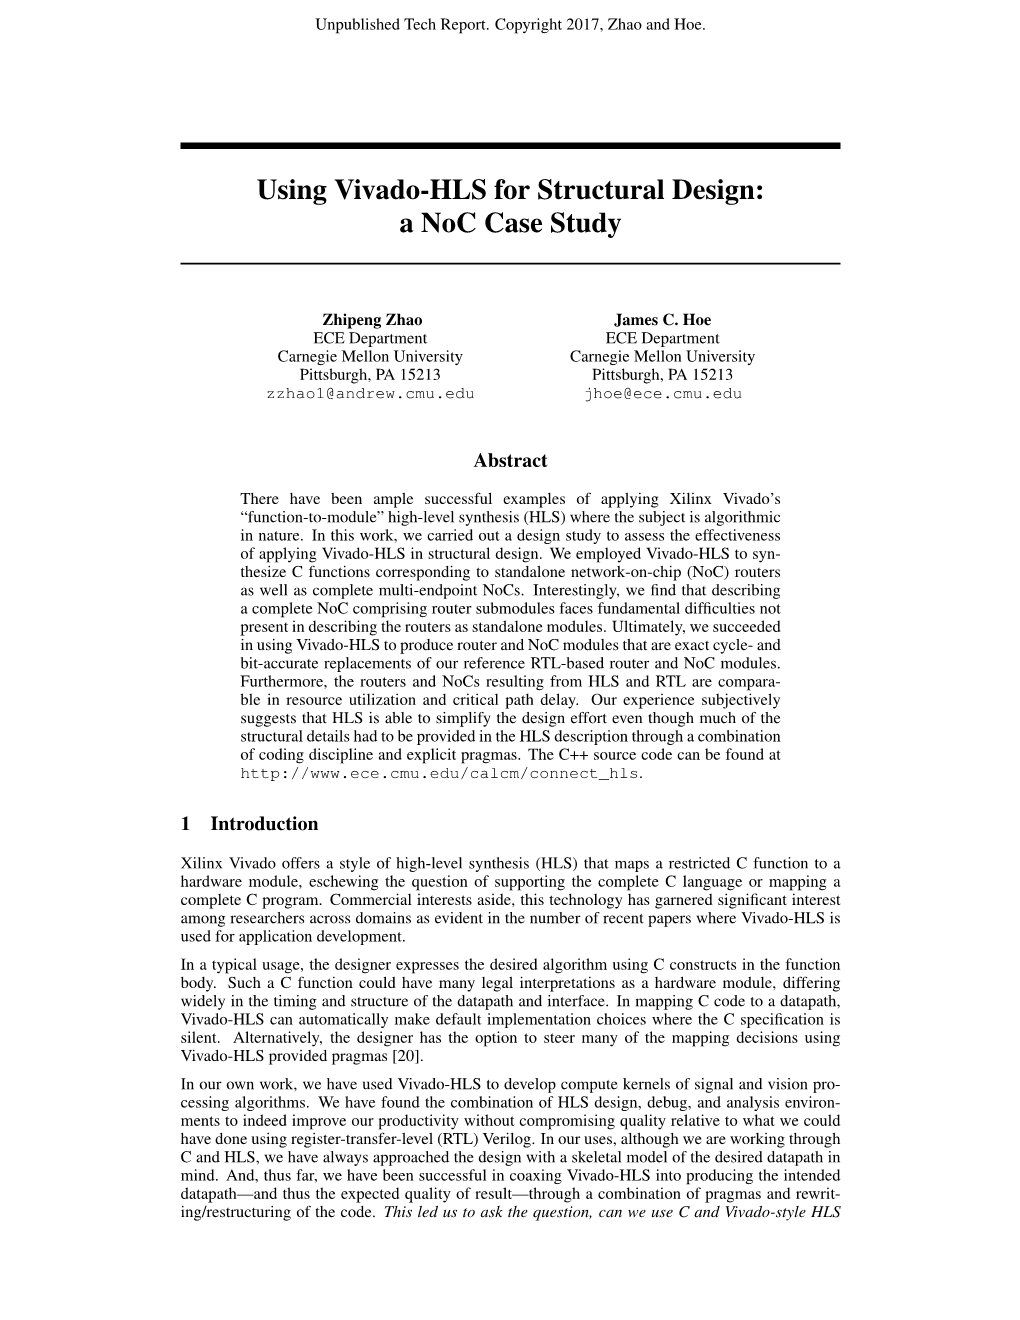 Using Vivado-HLS for Structural Design: a Noc Case Study